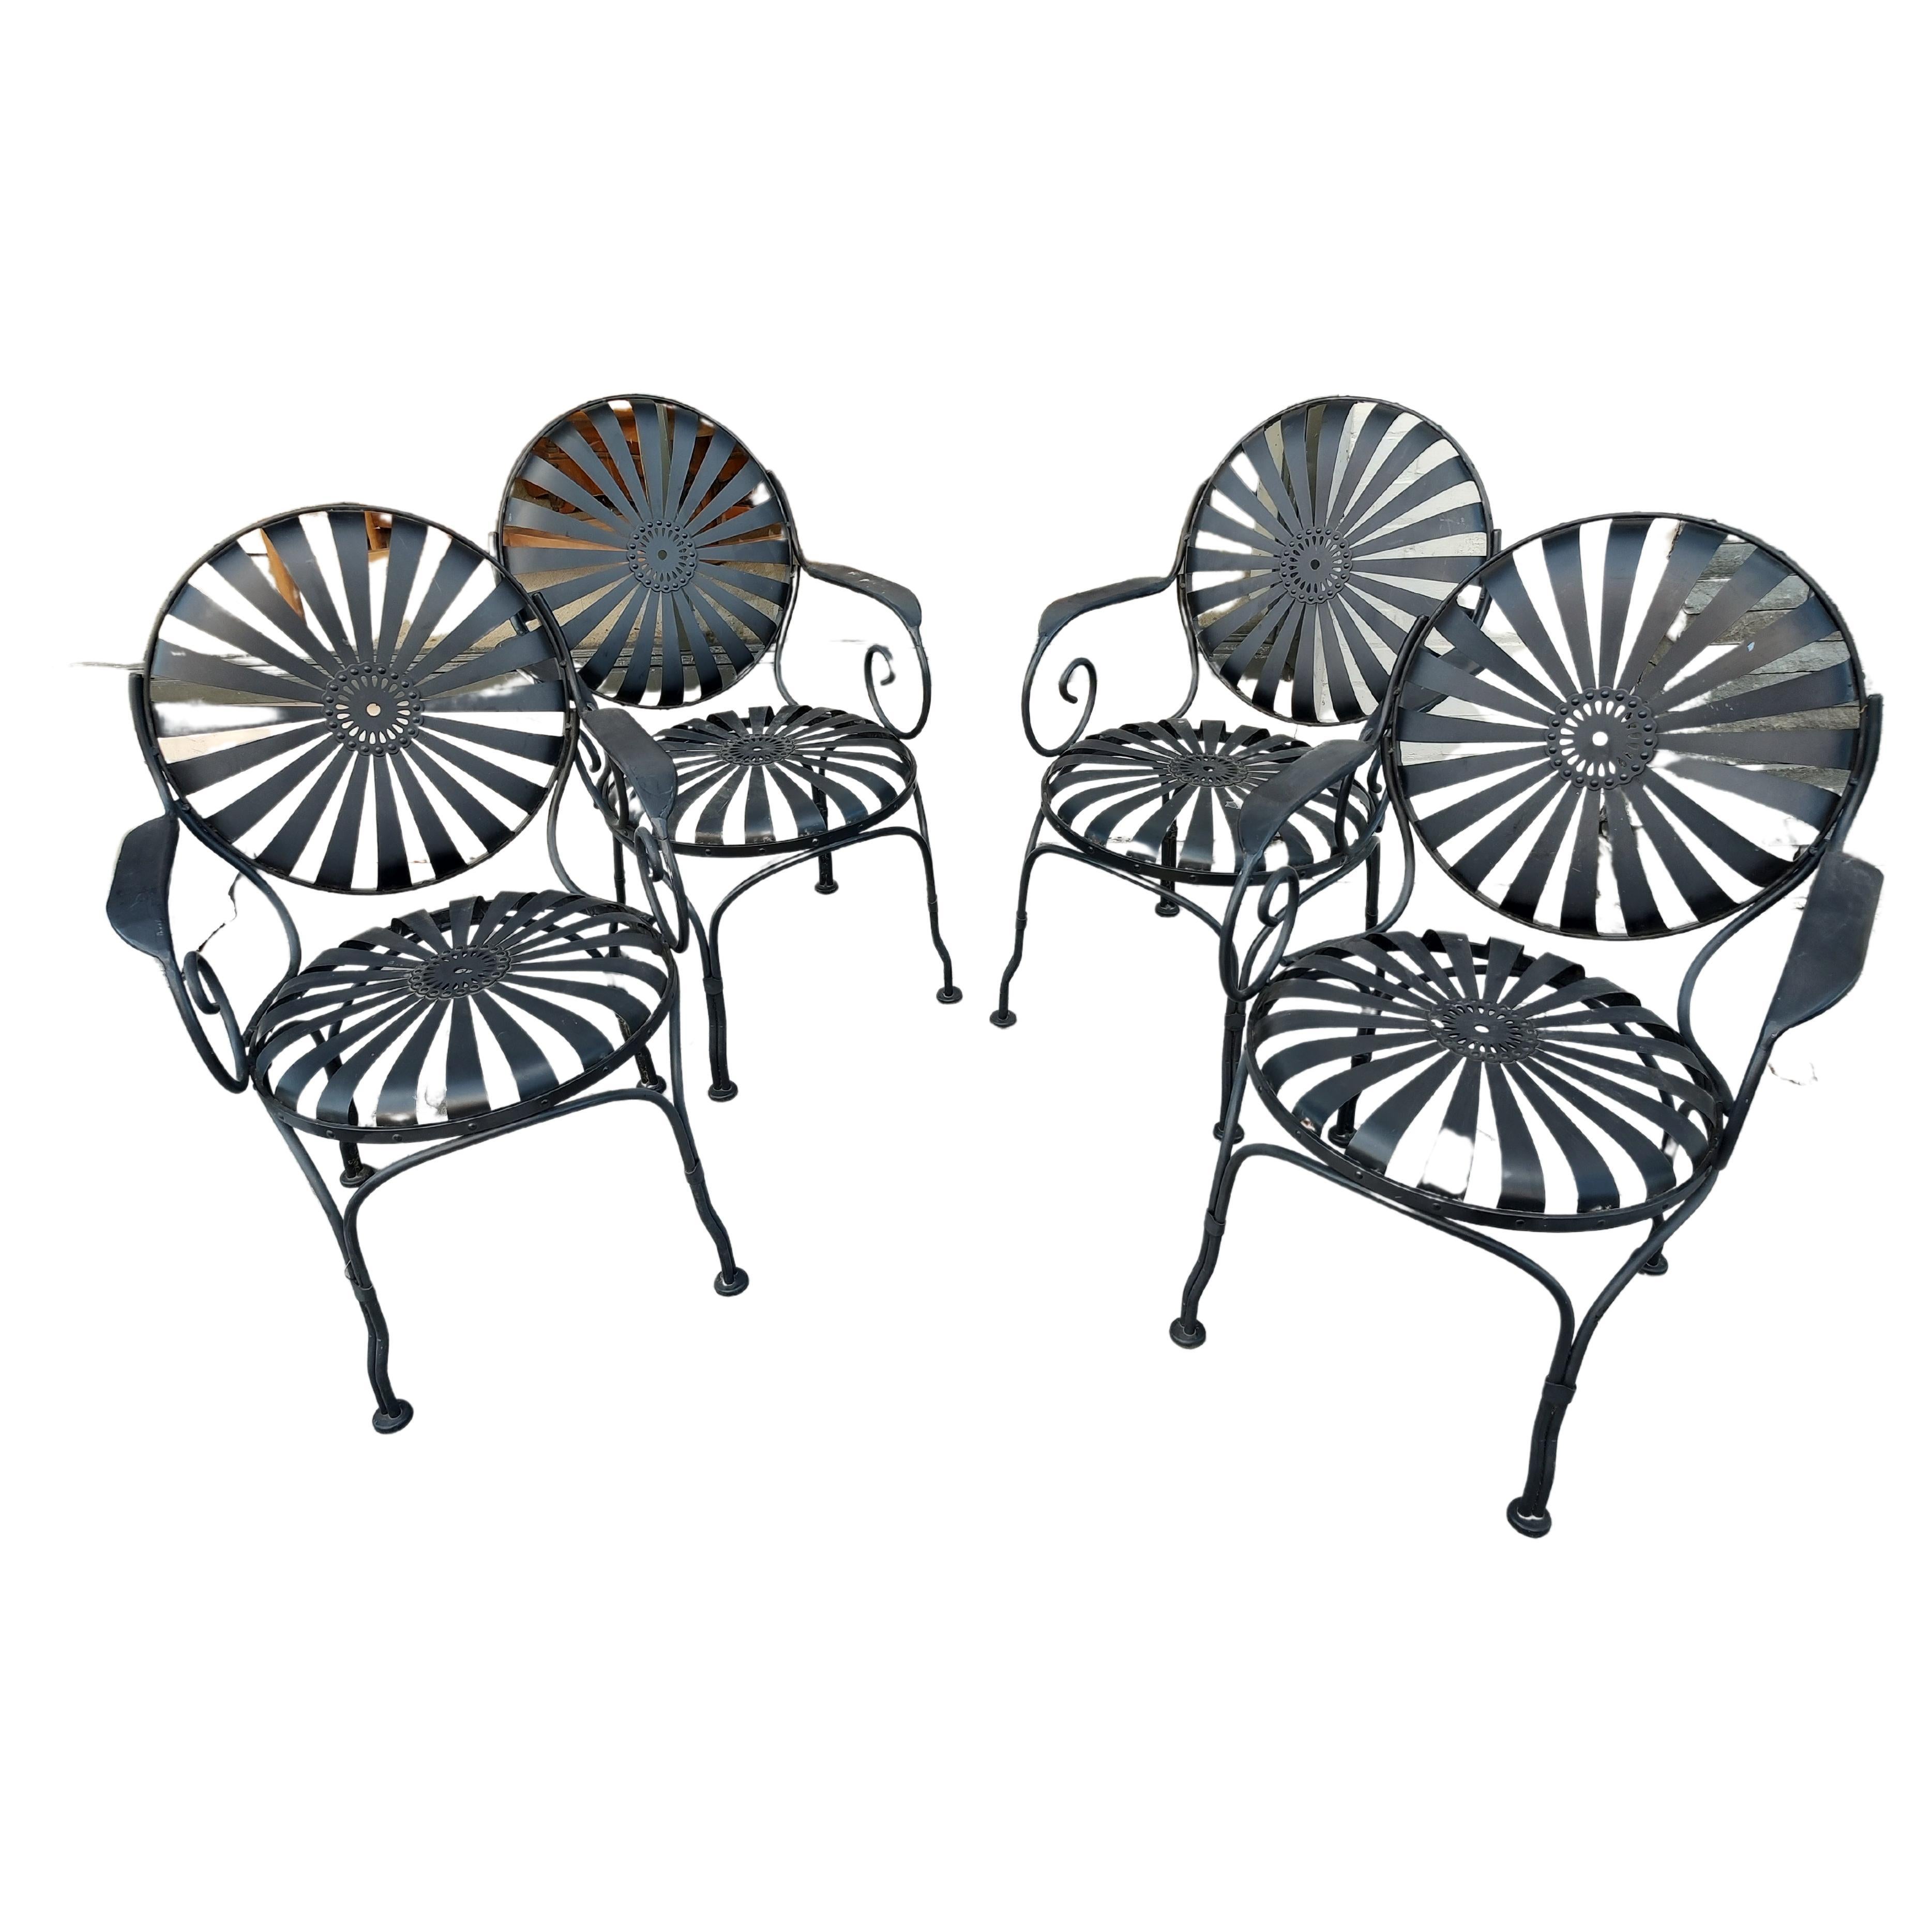 Hand-Crafted Set of 4 Iron Spring Seat Sunburst Sunflower Chairs, C1960